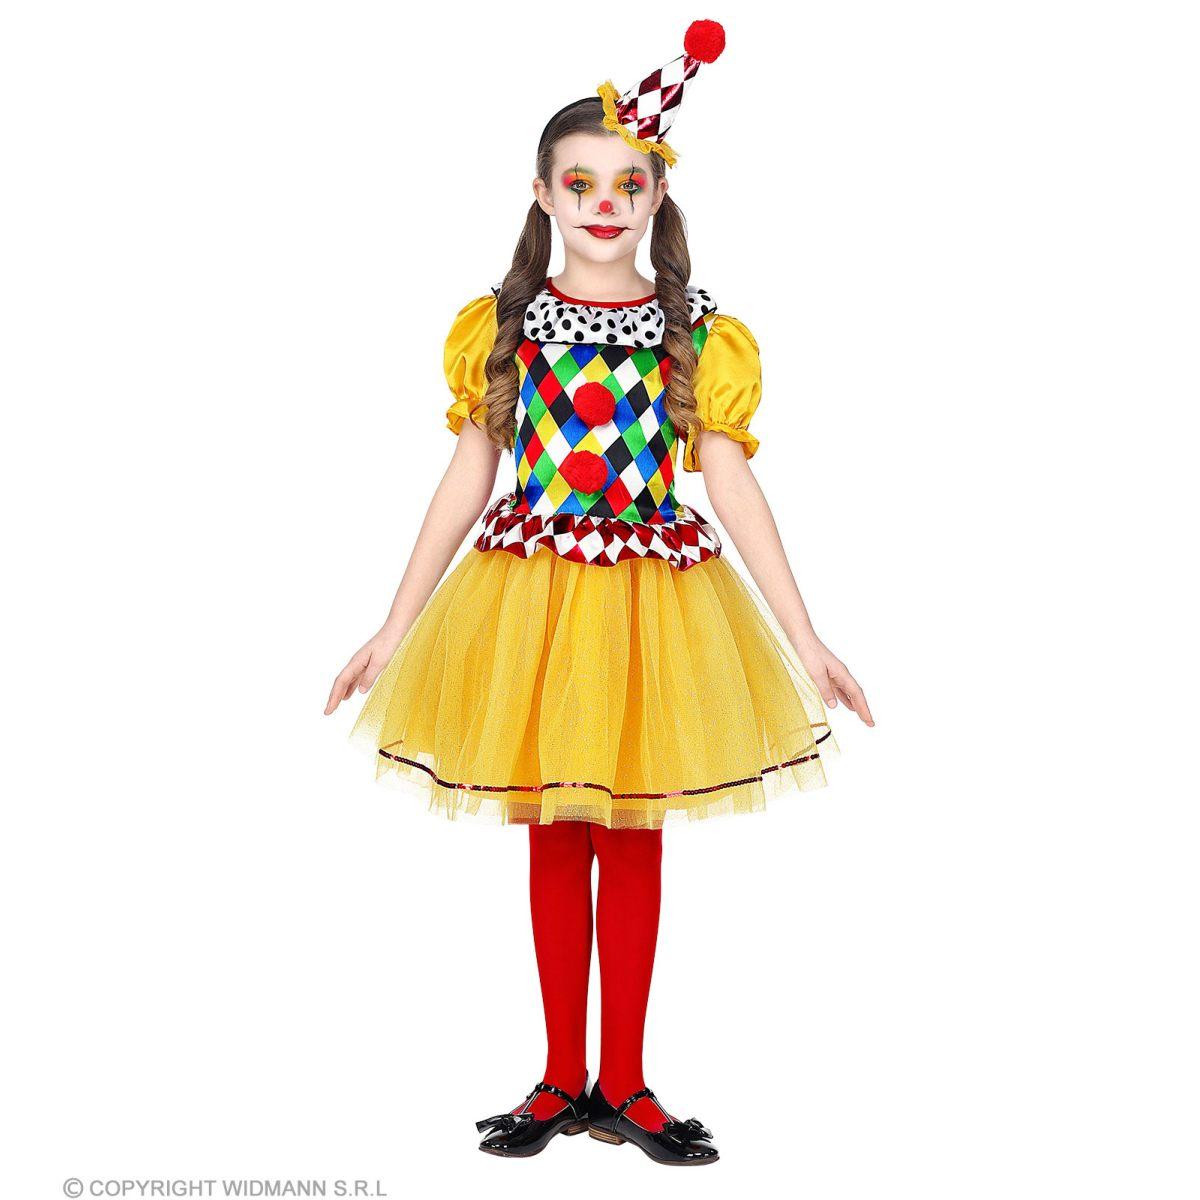 Widmann Costume Clown Pagliaccio 8003558069552 2212180000031